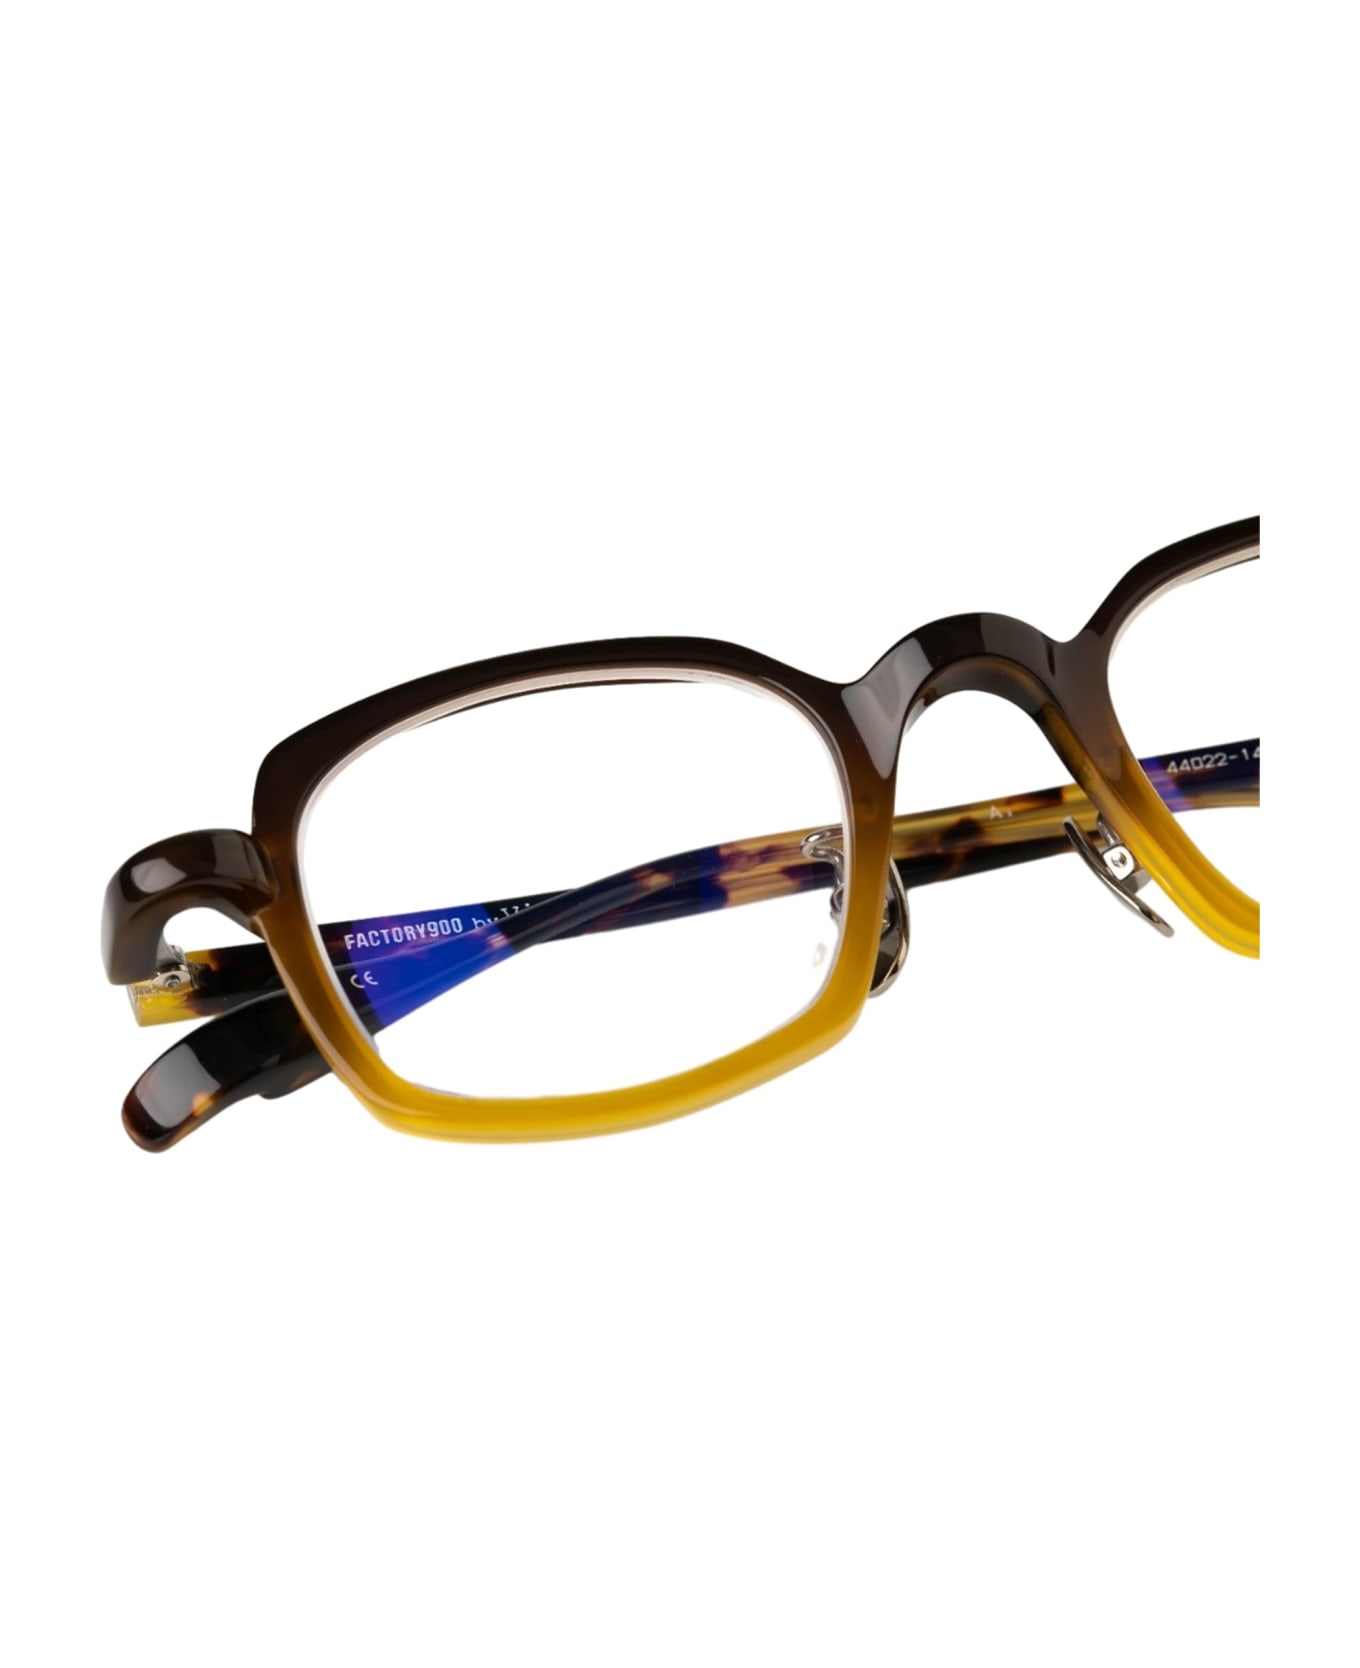 FACTORY900 Ai - 318 Glasses - brown tortoise アイウェア